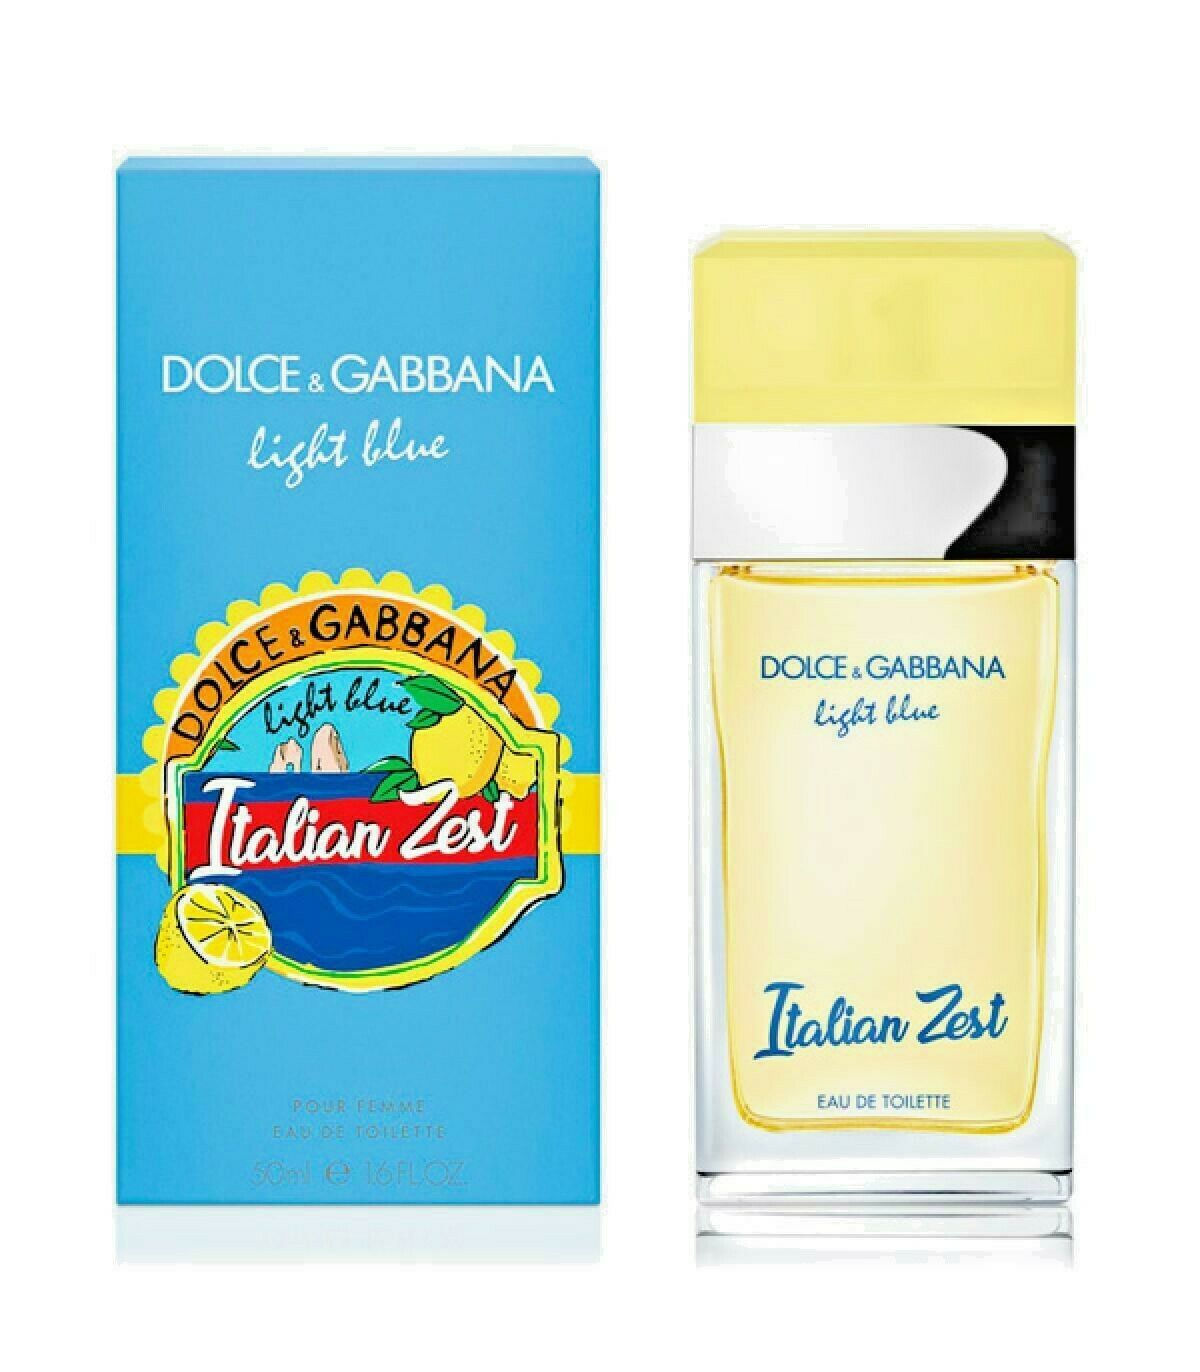 dolce gabbana perfume italian zest